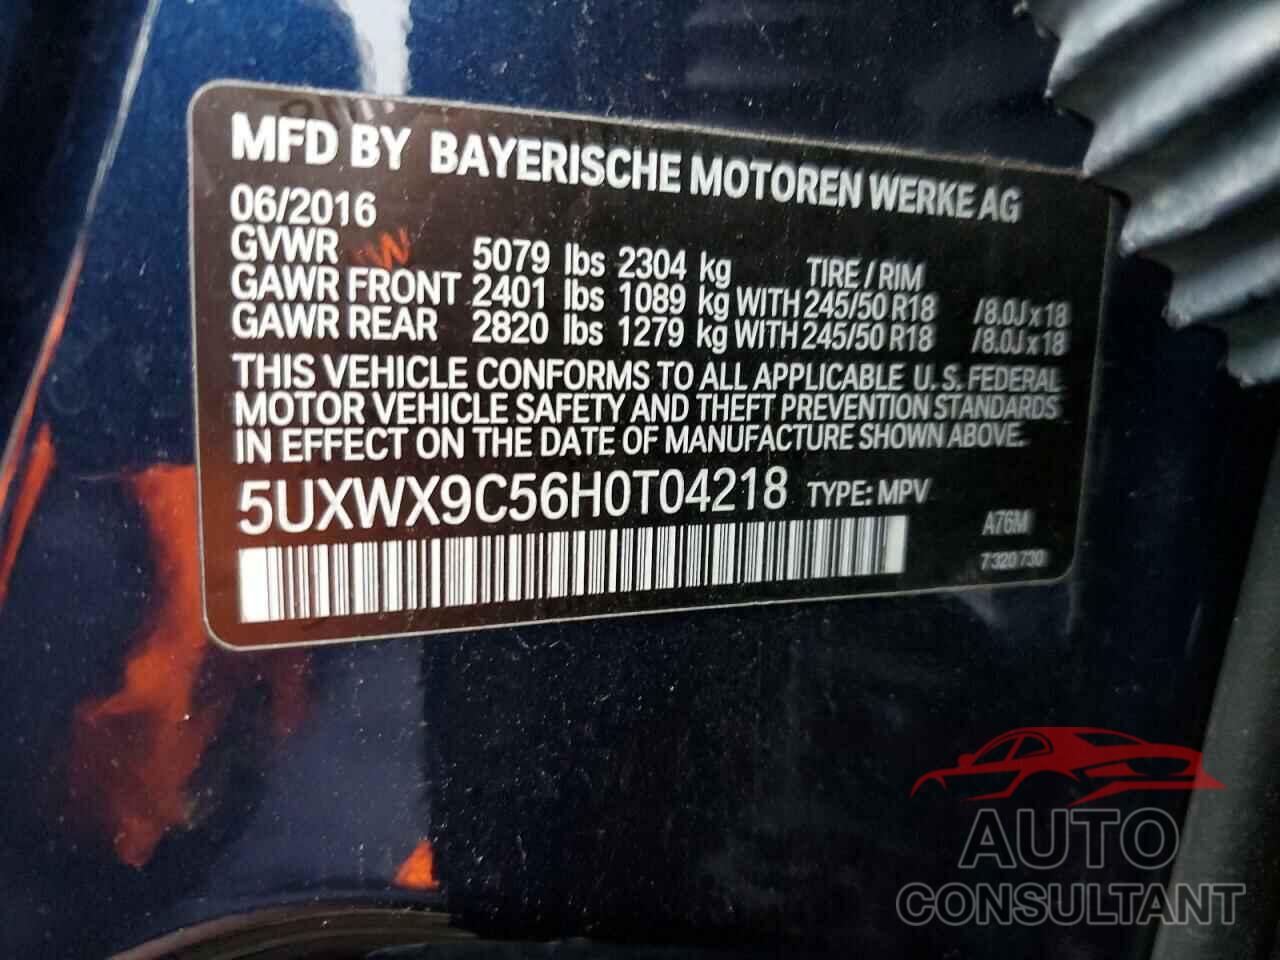 BMW X3 2017 - 5UXWX9C56H0T04218